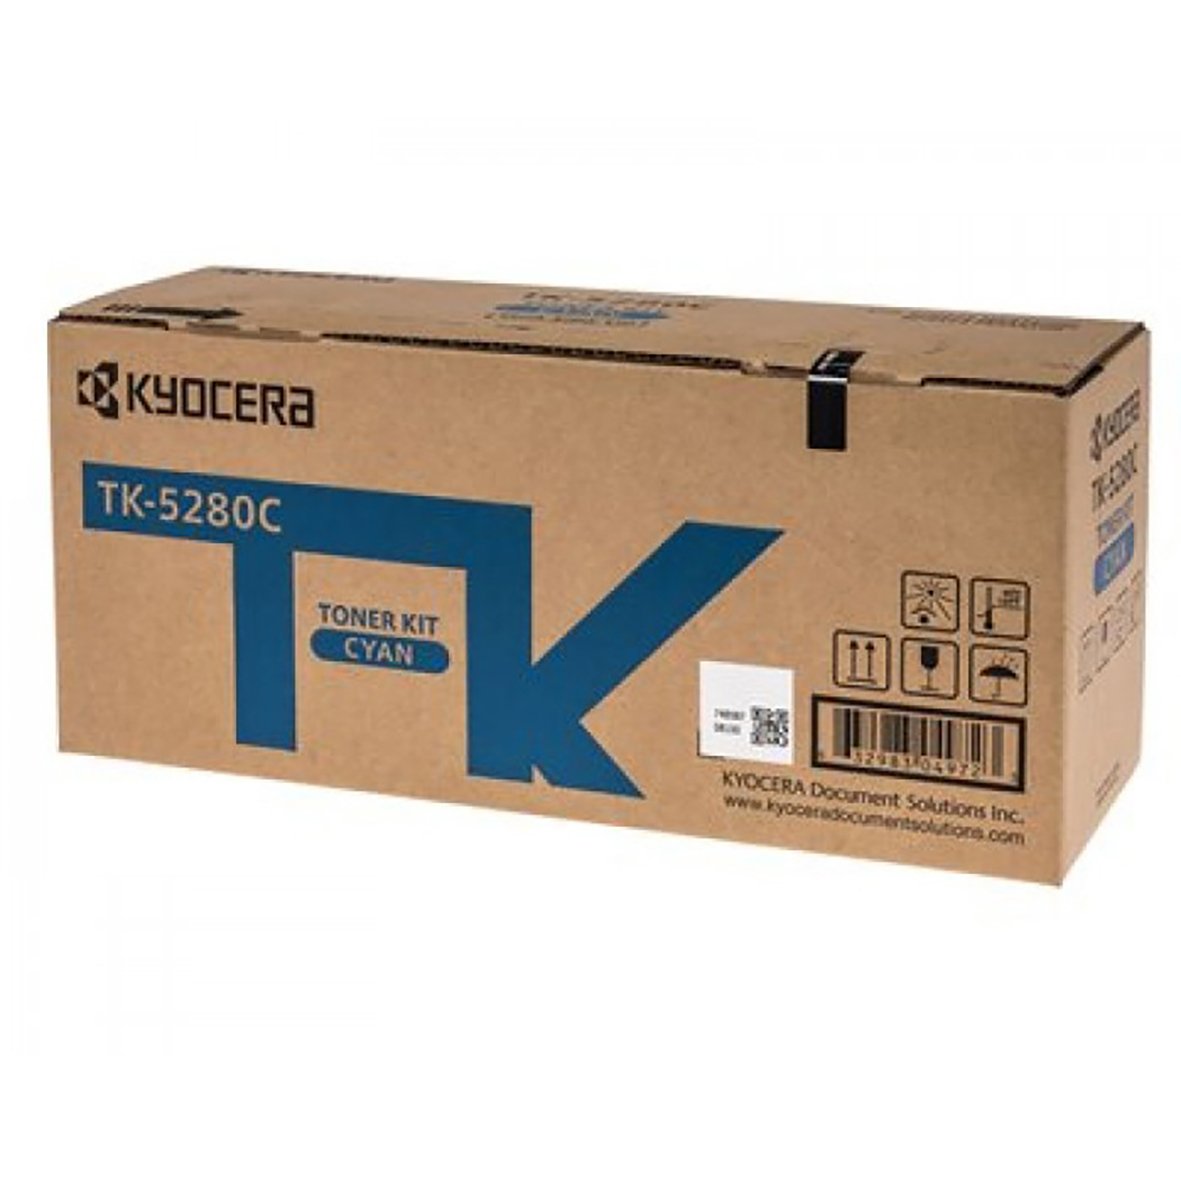 Toner Kit Kyocera 11000sid TK-5280C cyan